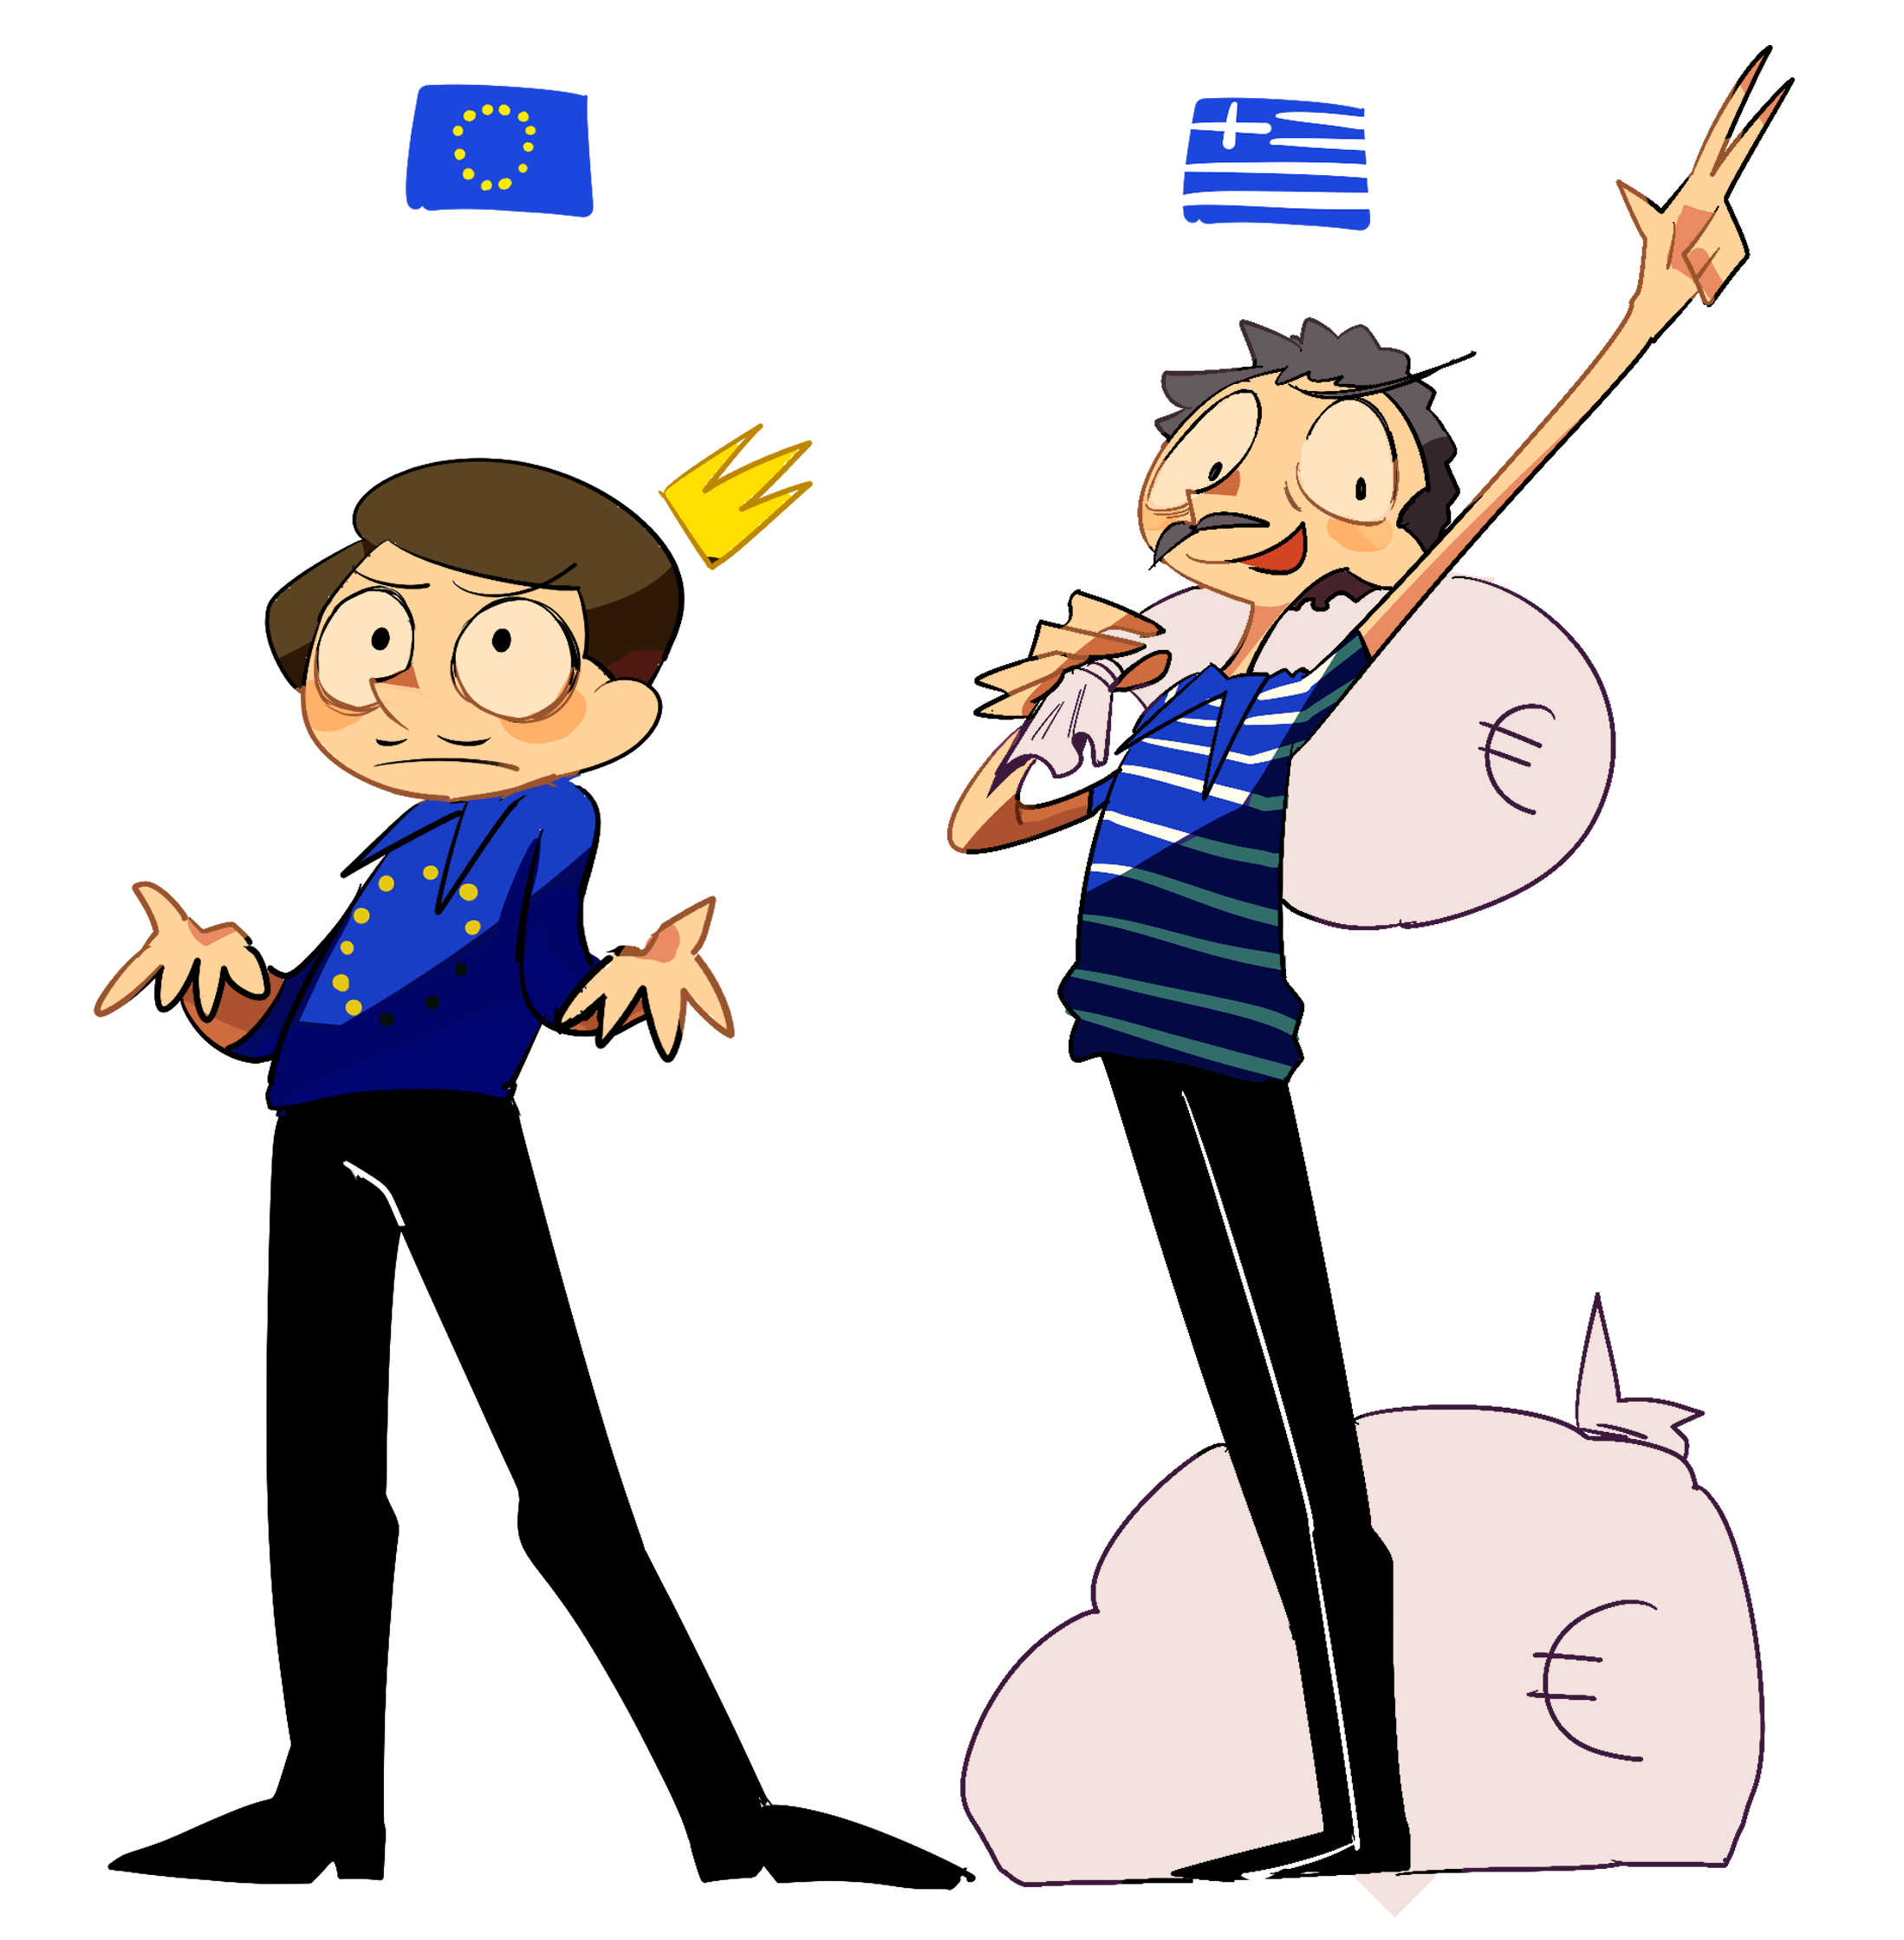 EU and Greece satwcomic.com